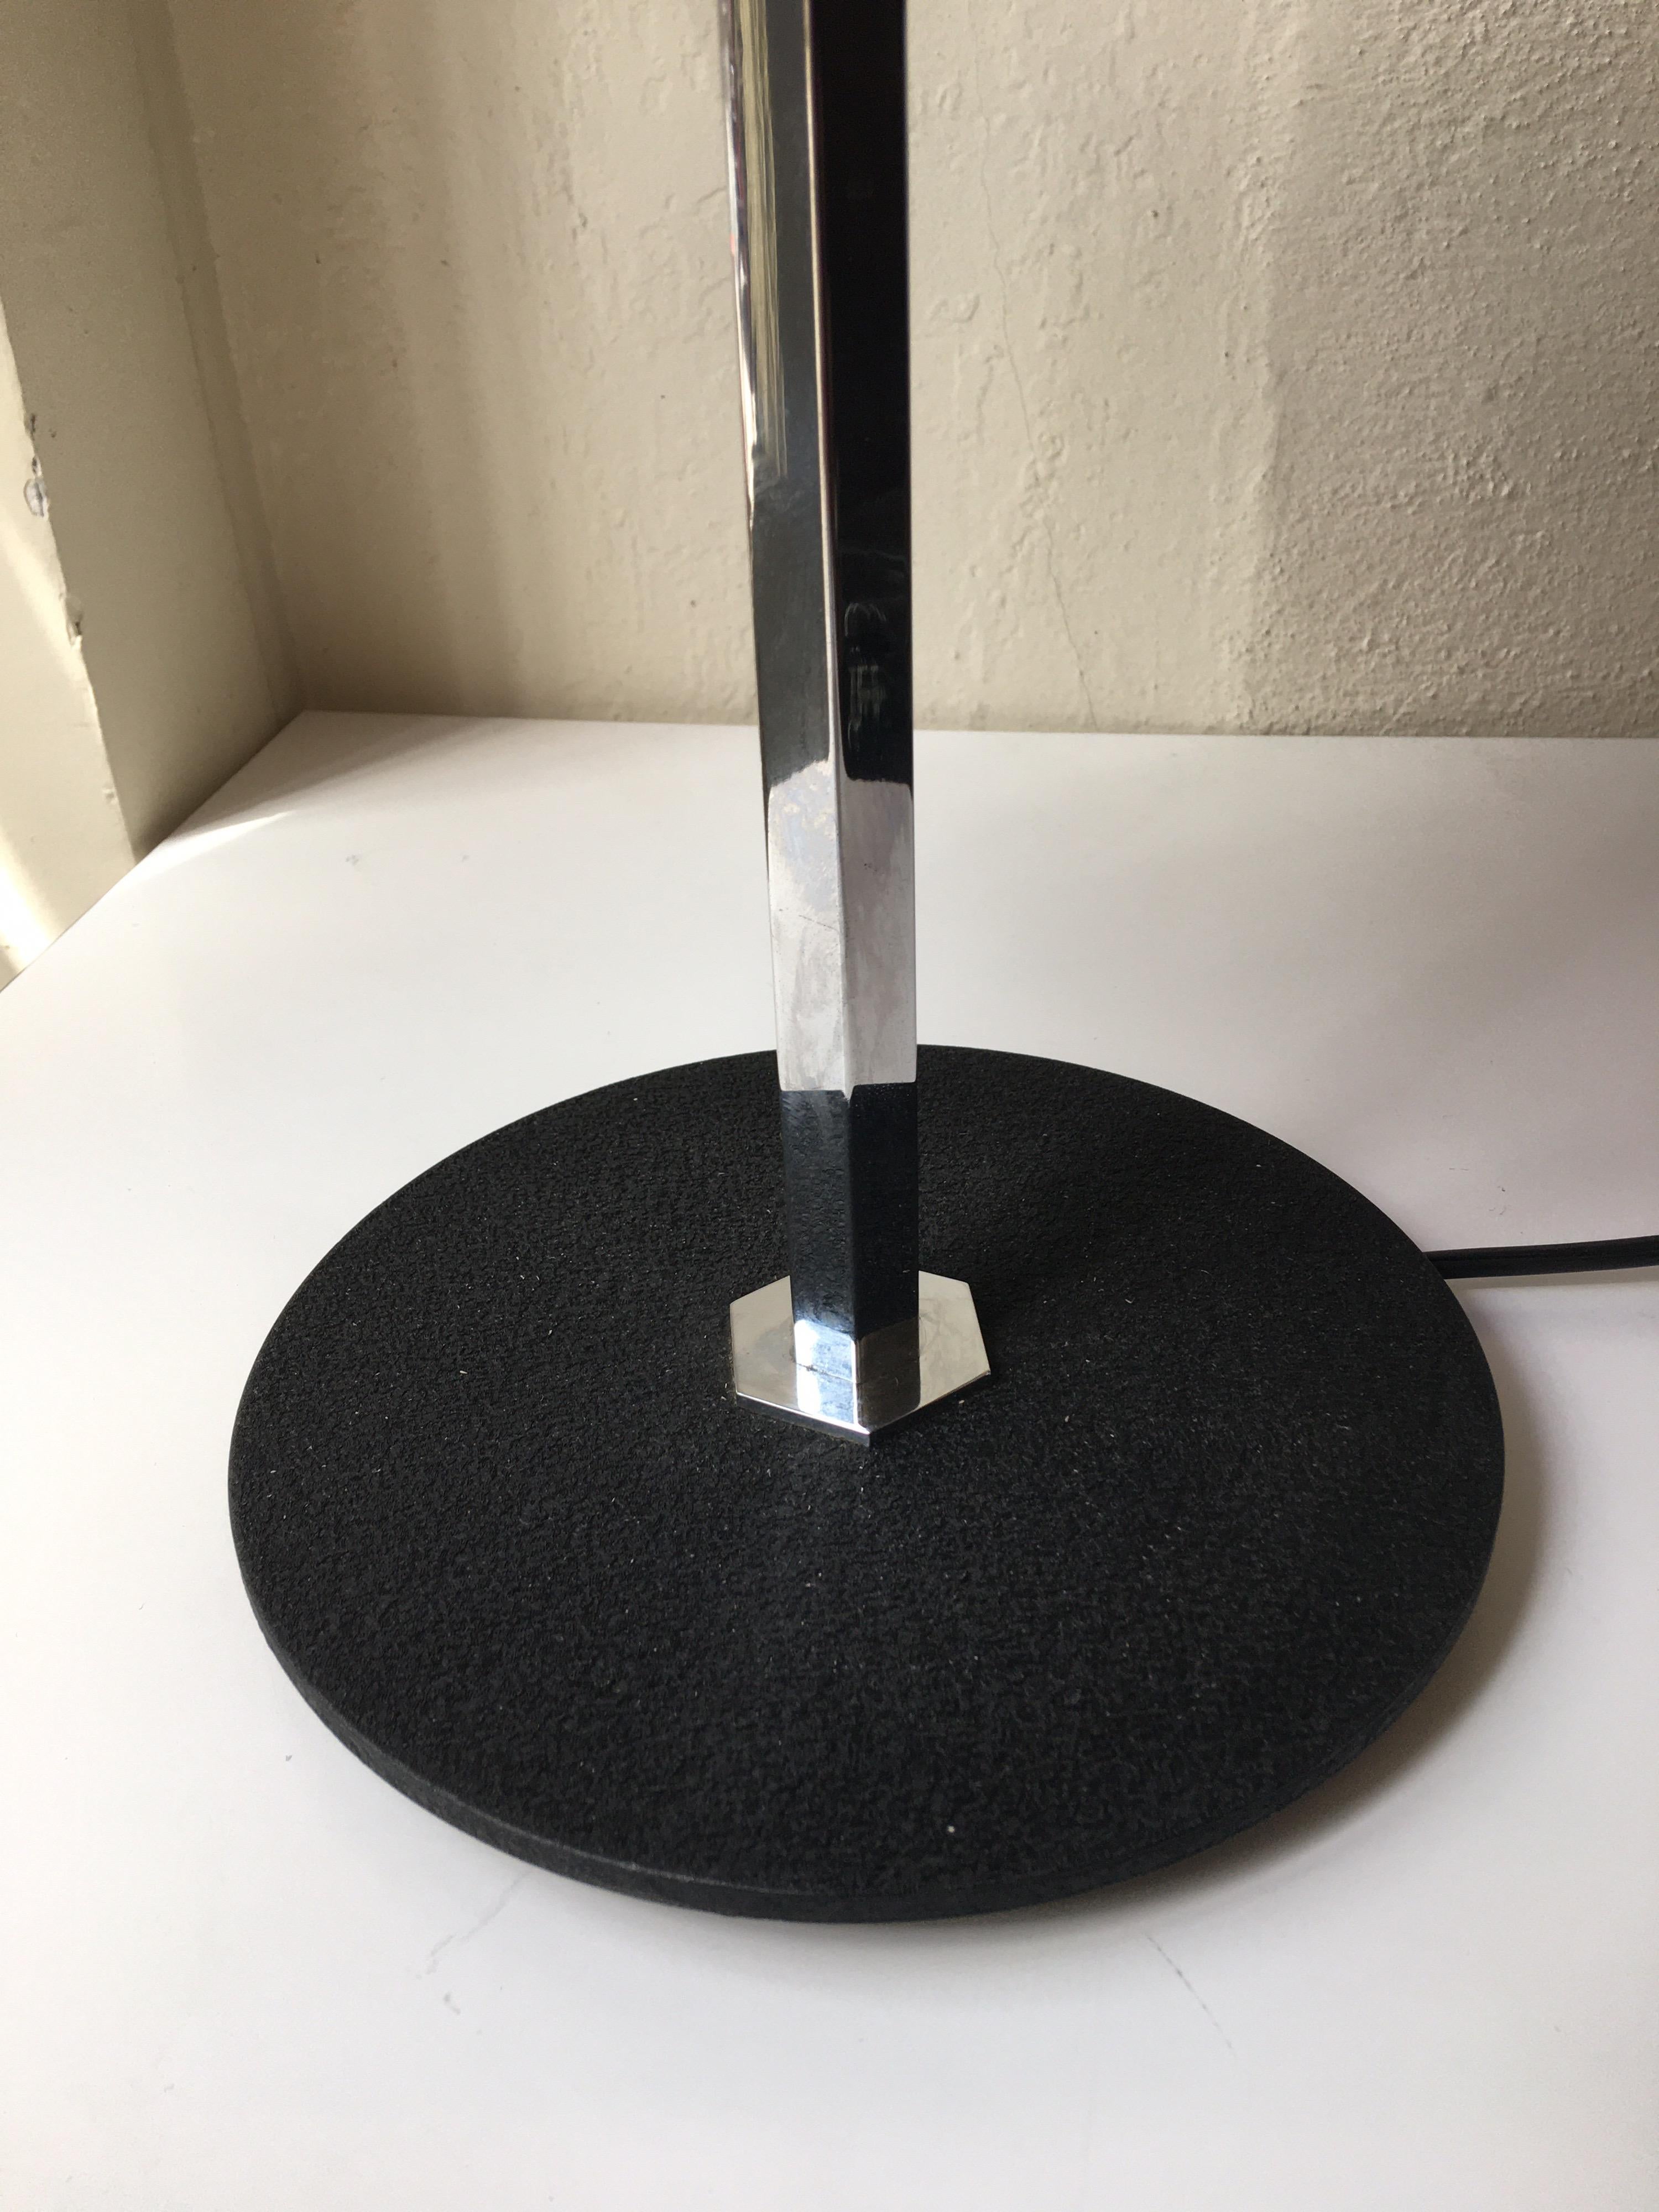 arteluce table lamp